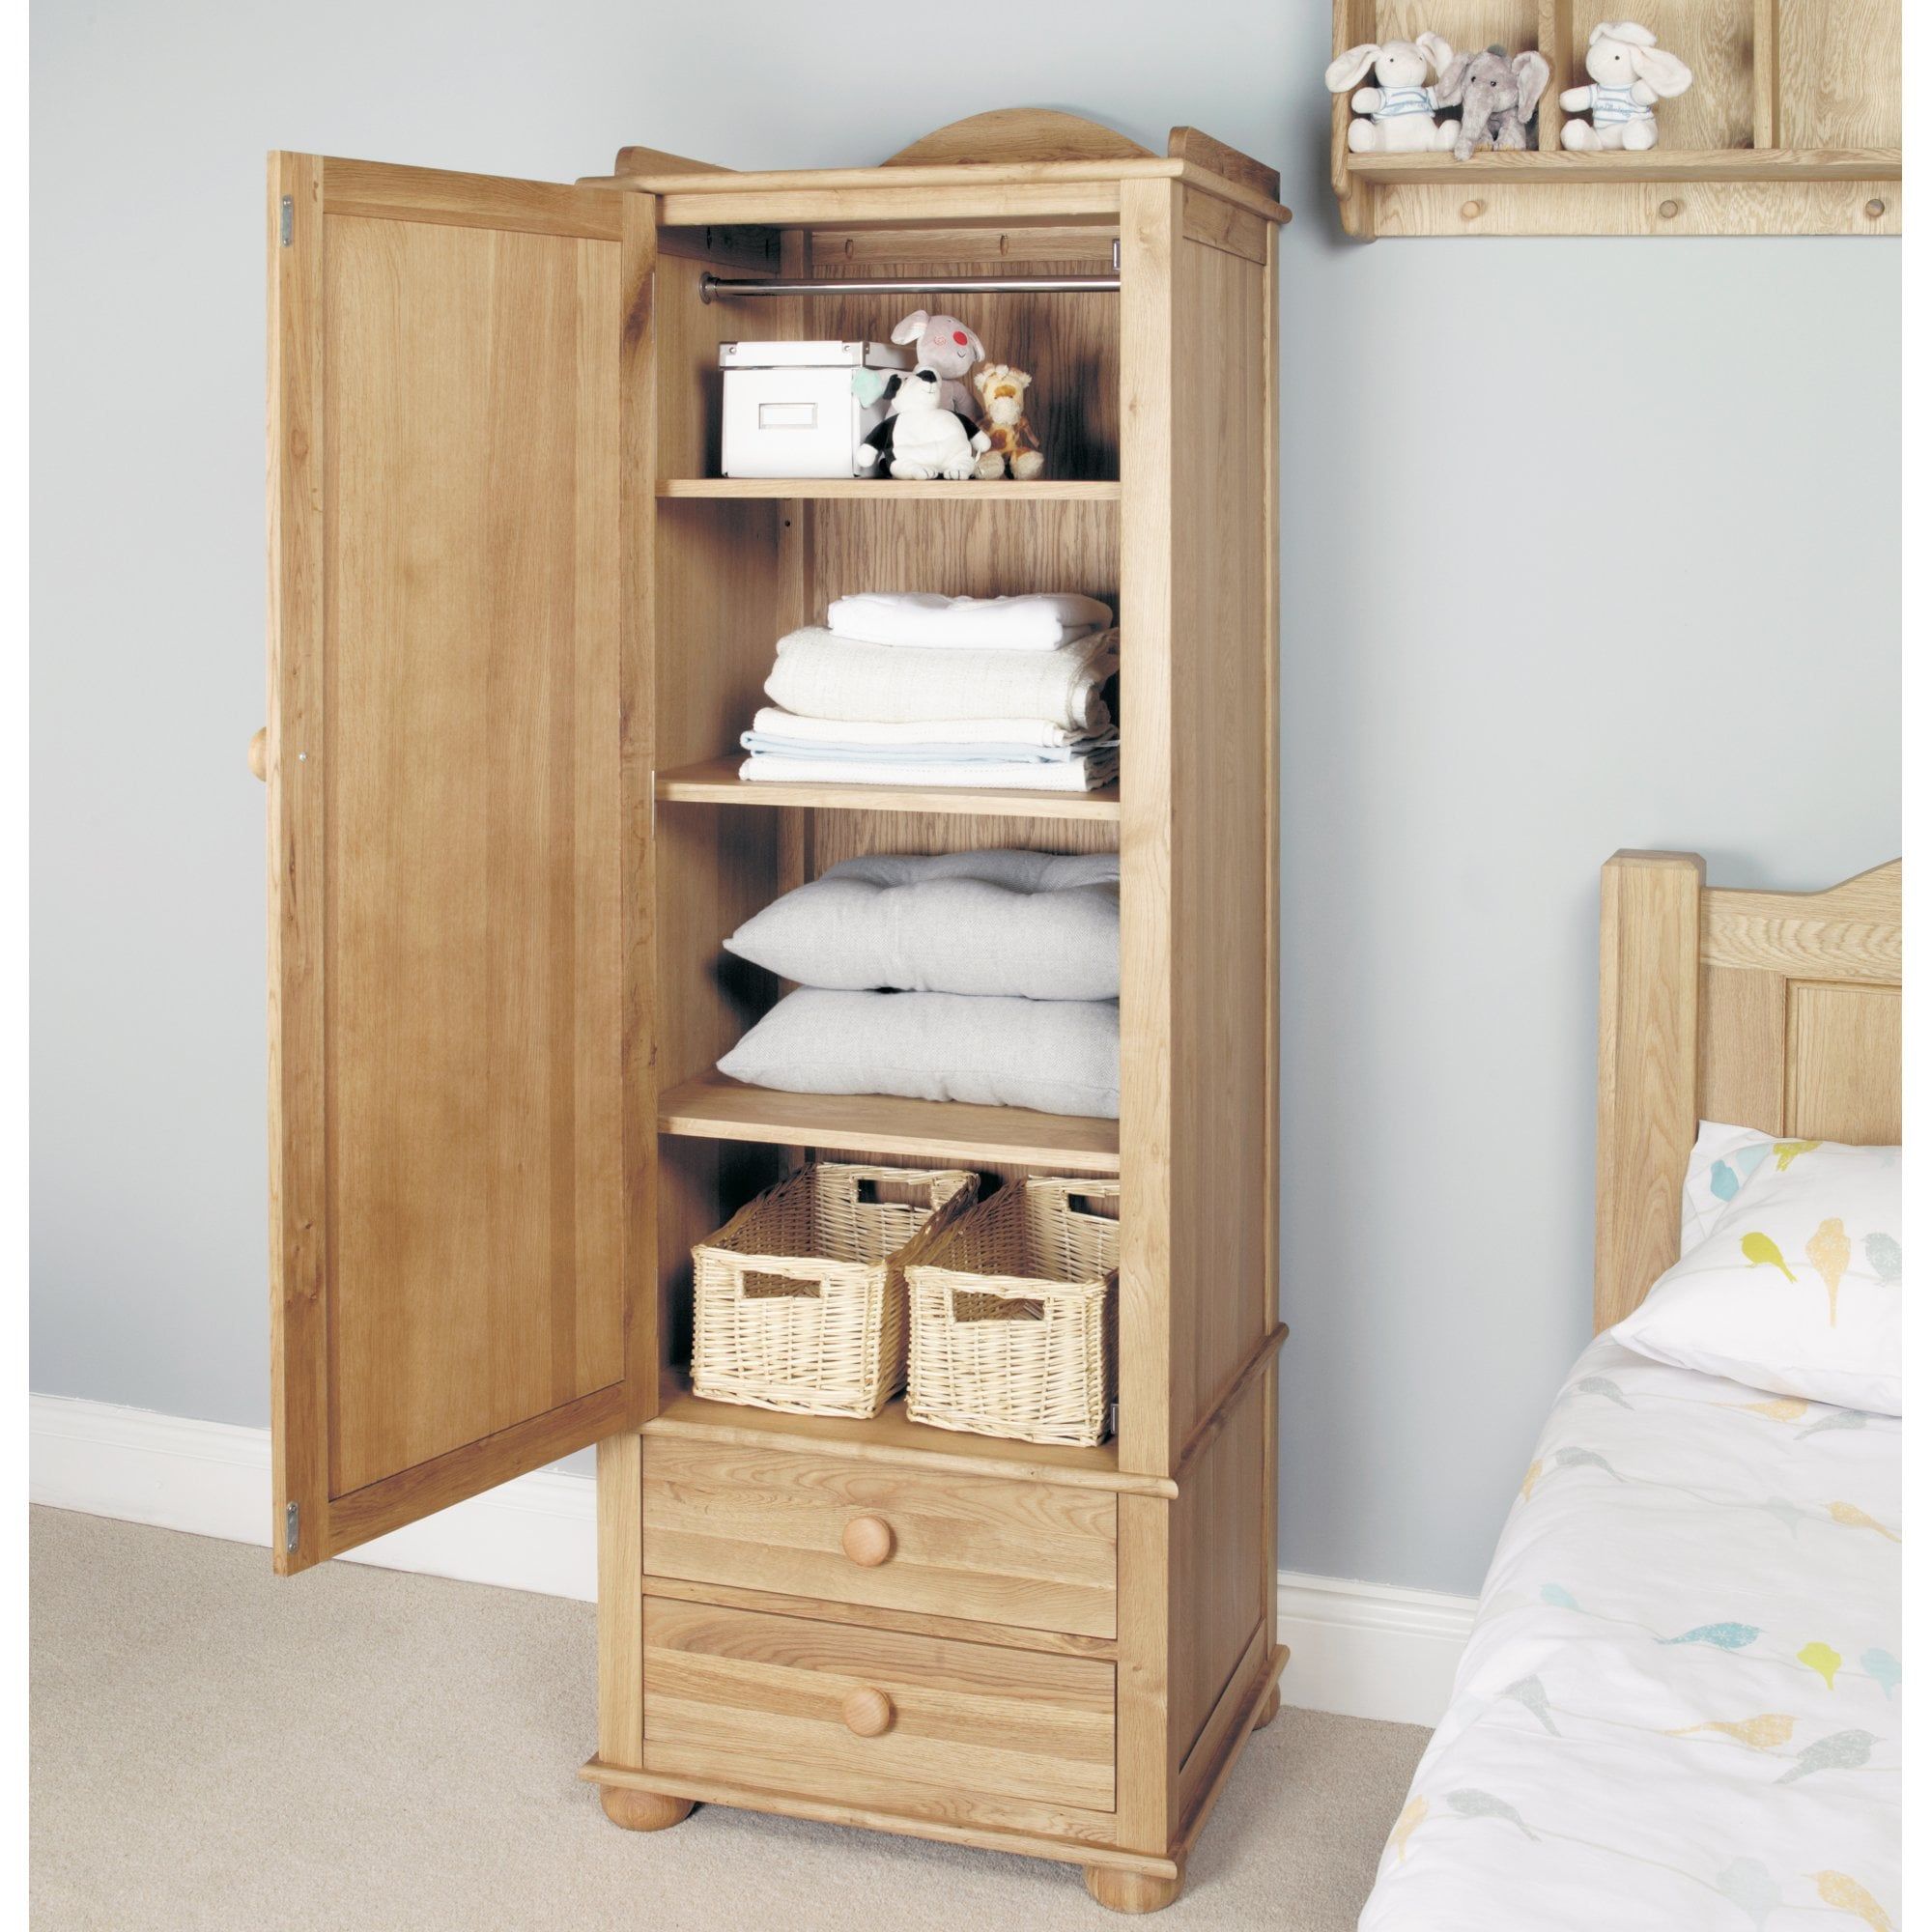 Amelie Oak Childrens Single Wardrobe – 1 Door – Bedroom From Breeze  Furniture Uk With Regard To Single Oak Wardrobes With Drawers (View 8 of 15)